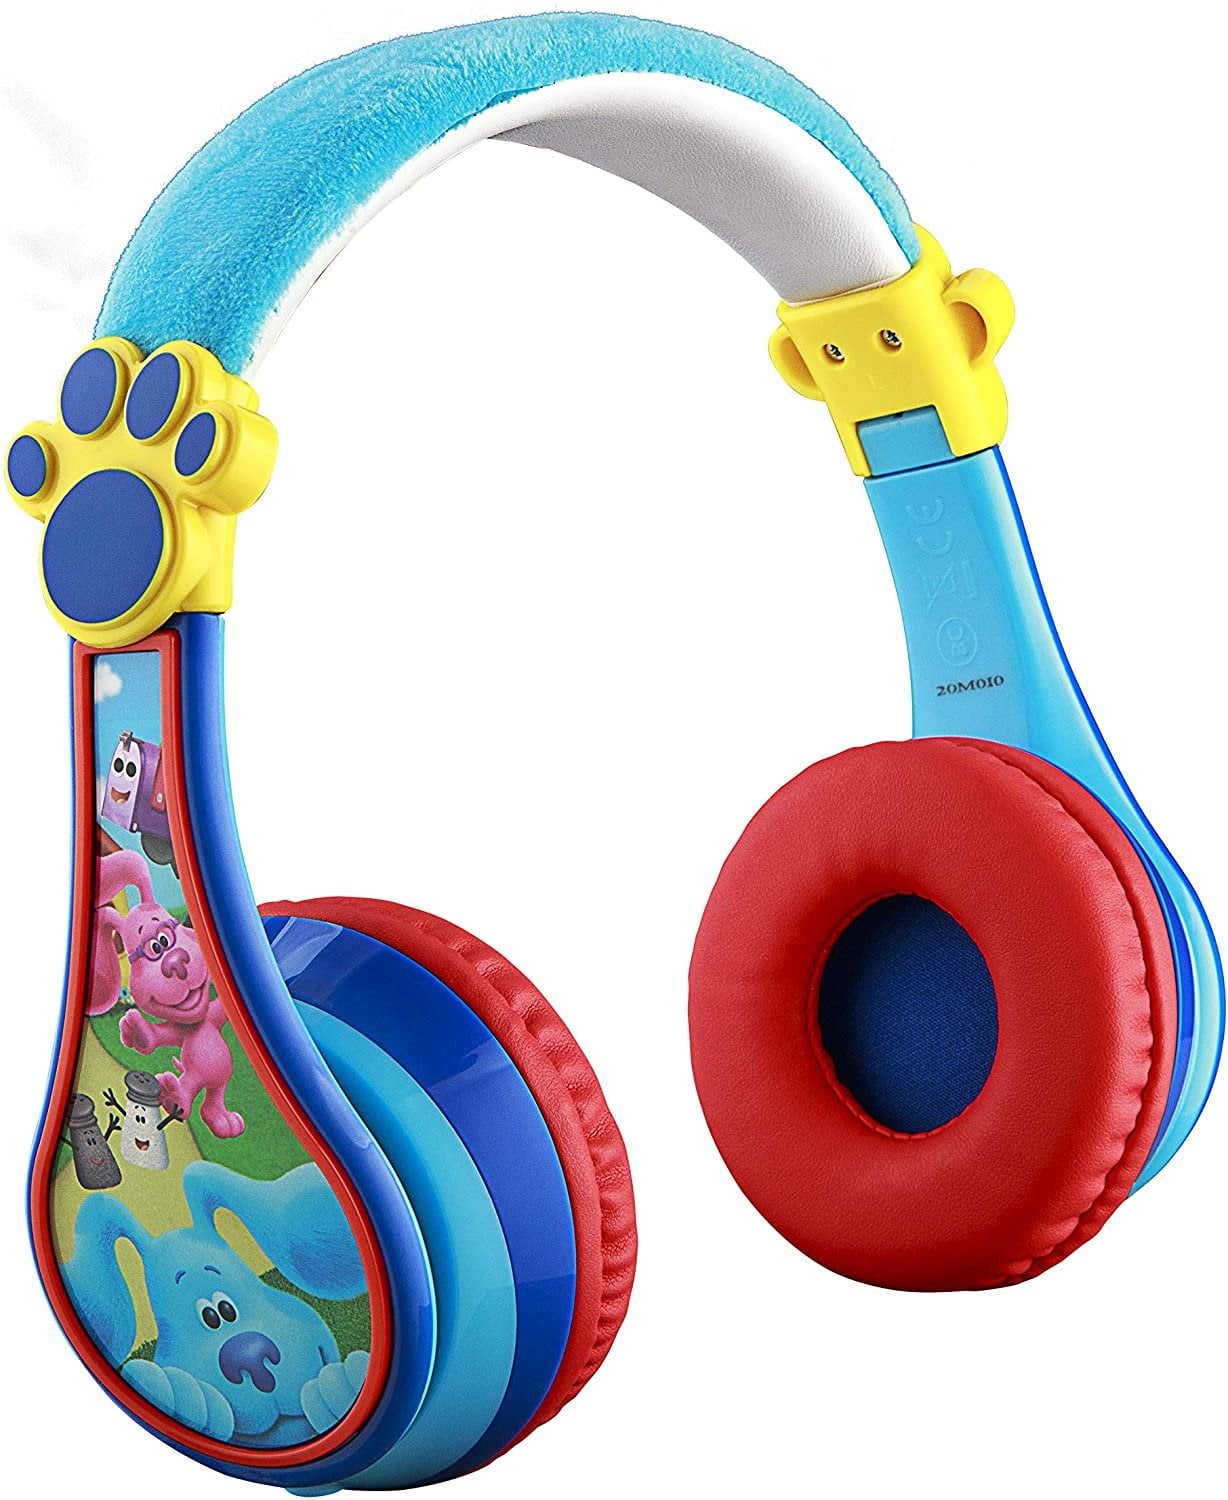 Koss KPH7 On-Ear Stereo Headphones for 3.5 mm Jack iMac/Laptop/DJ/MP3 Players 